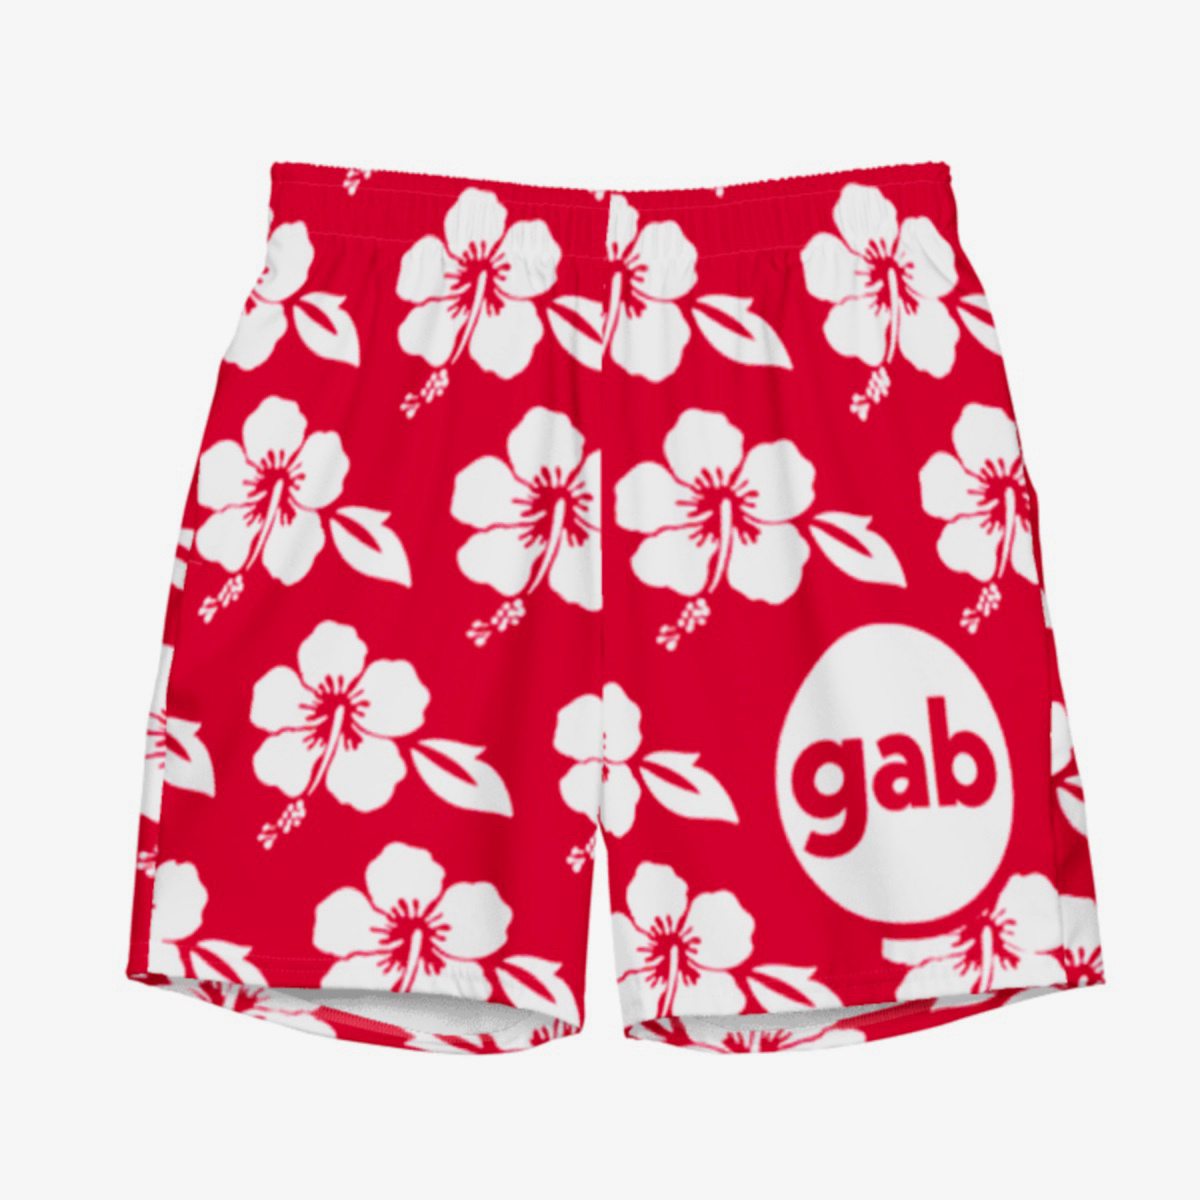 Gab Red Flower Swim Trunks - 3XL